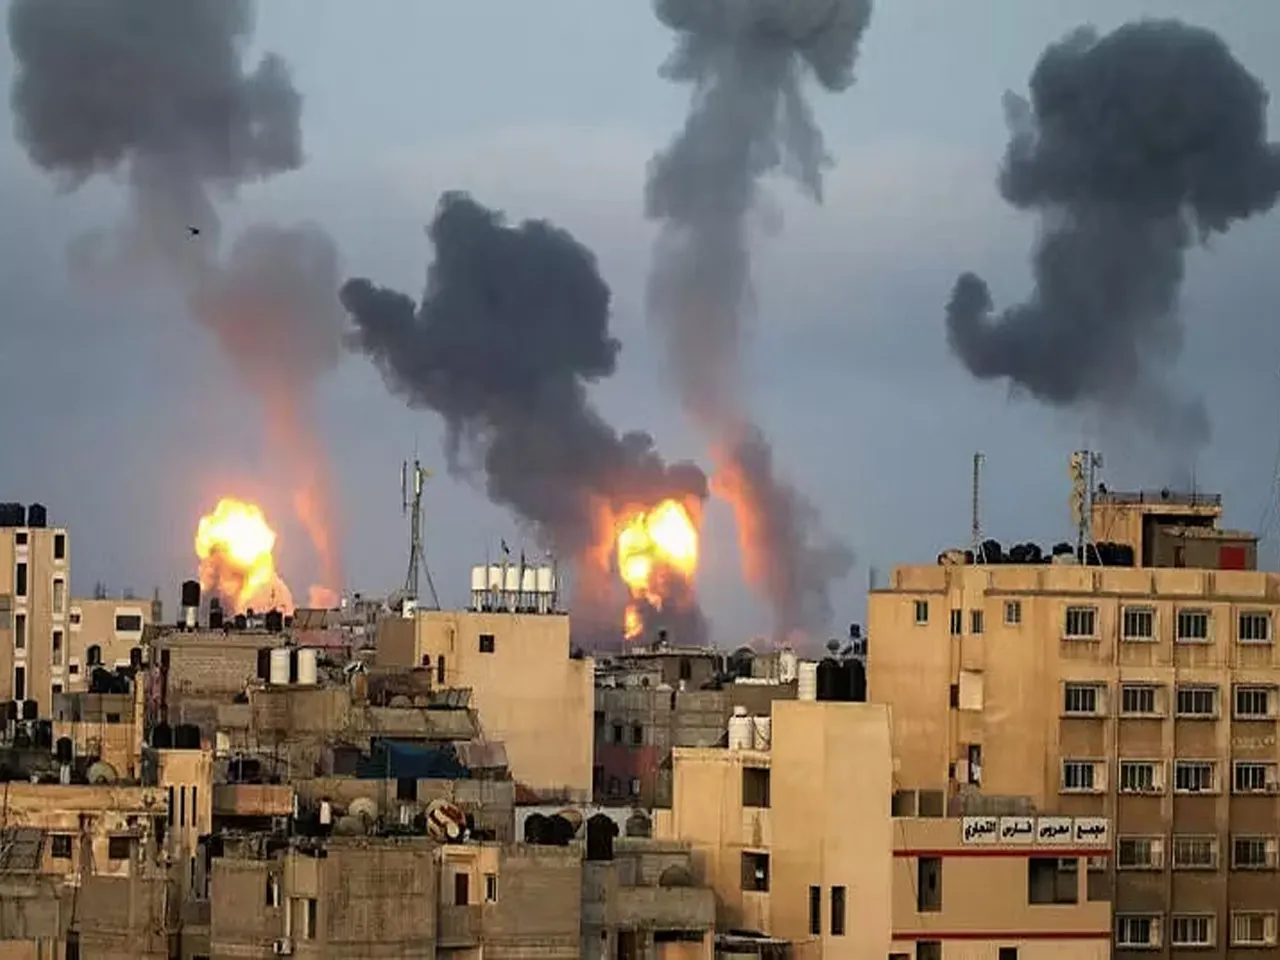 Militants launch rocket attacks on Israel in Gaza